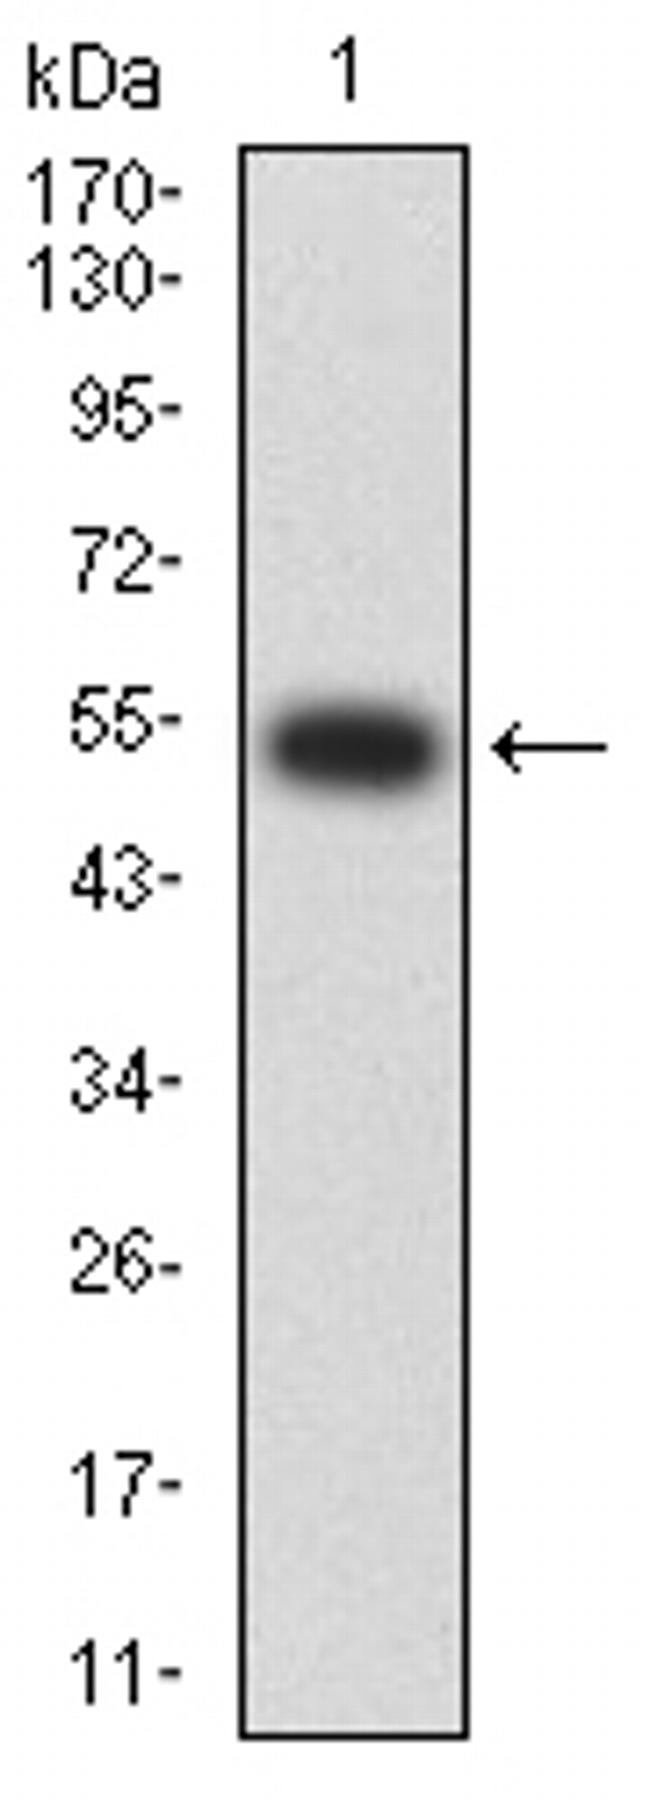 CHRNA2 Antibody in Western Blot (WB)